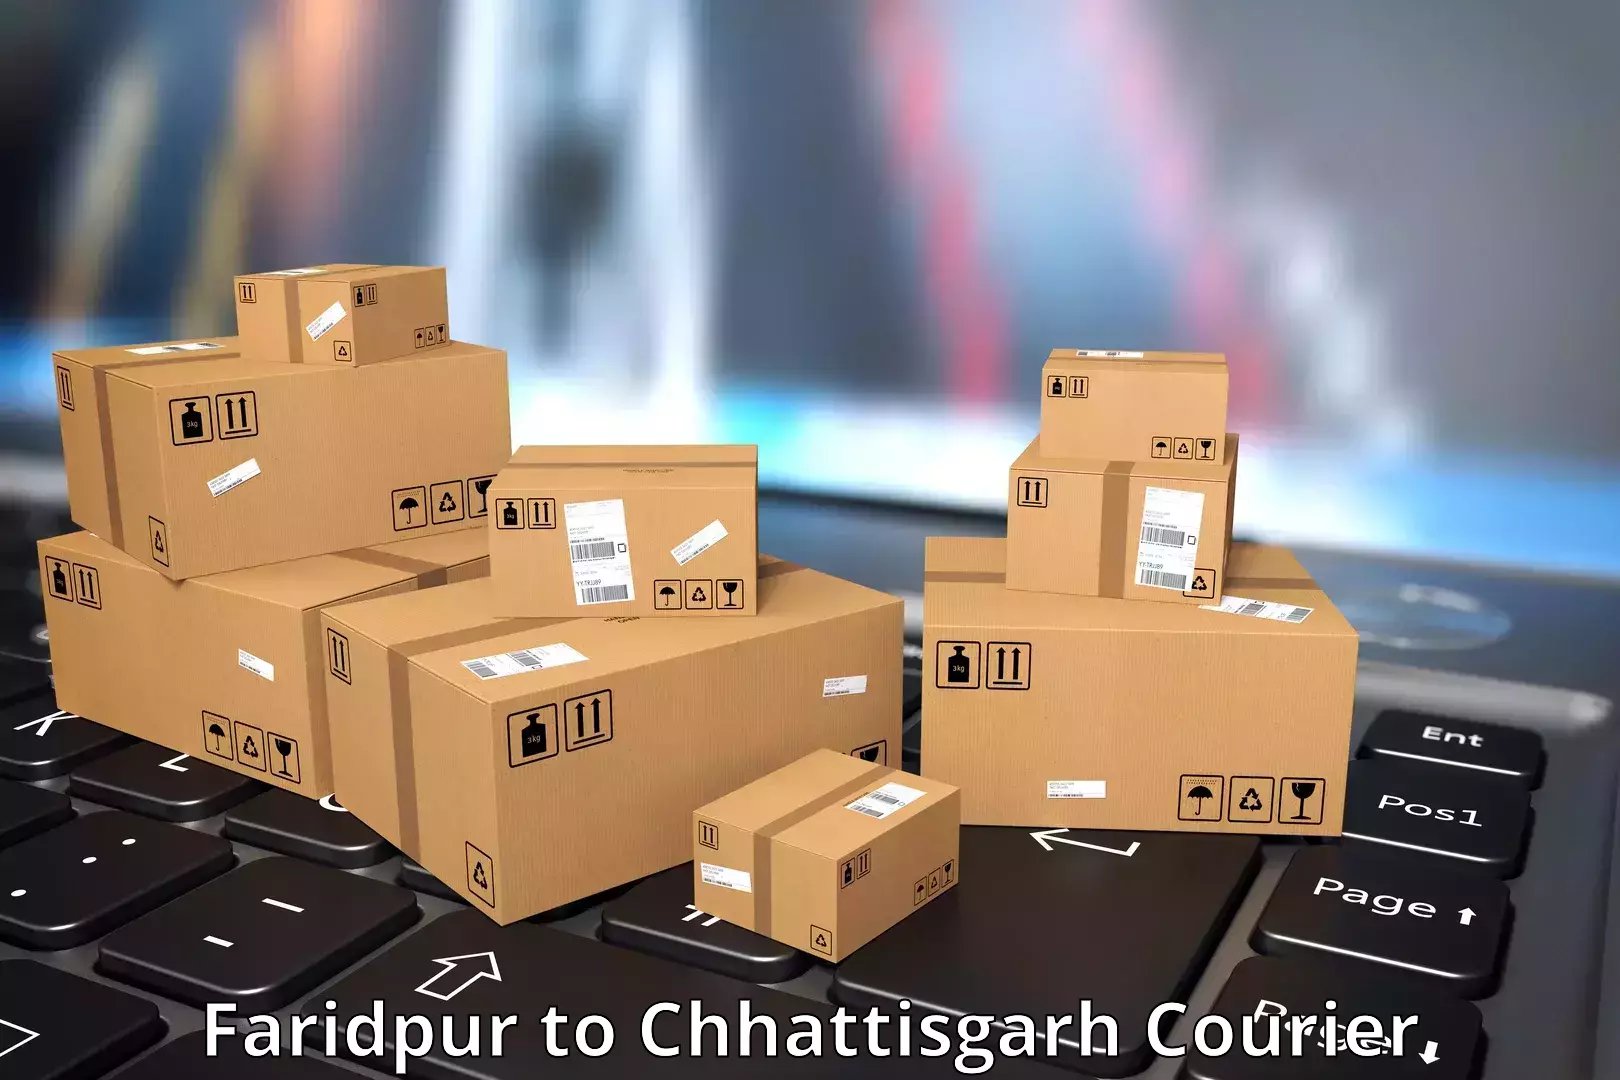 Nationwide courier service Faridpur to Patna Chhattisgarh